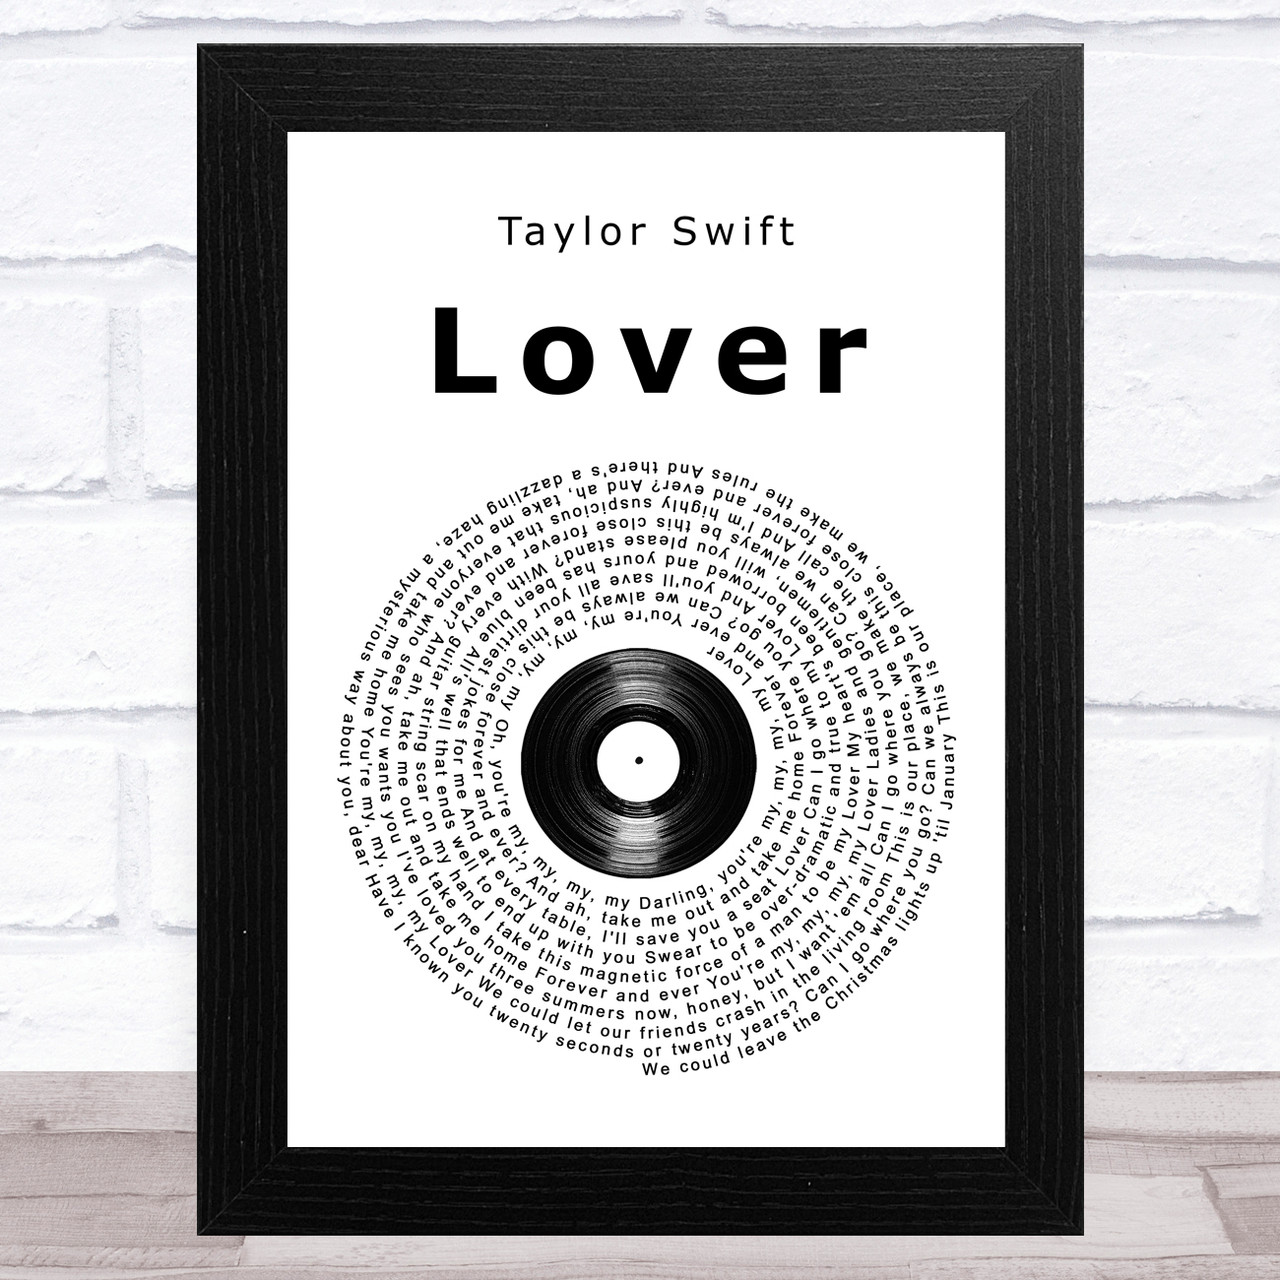 Taylor Swift Lyrics Card Periphery Lover Album Lyrics Book